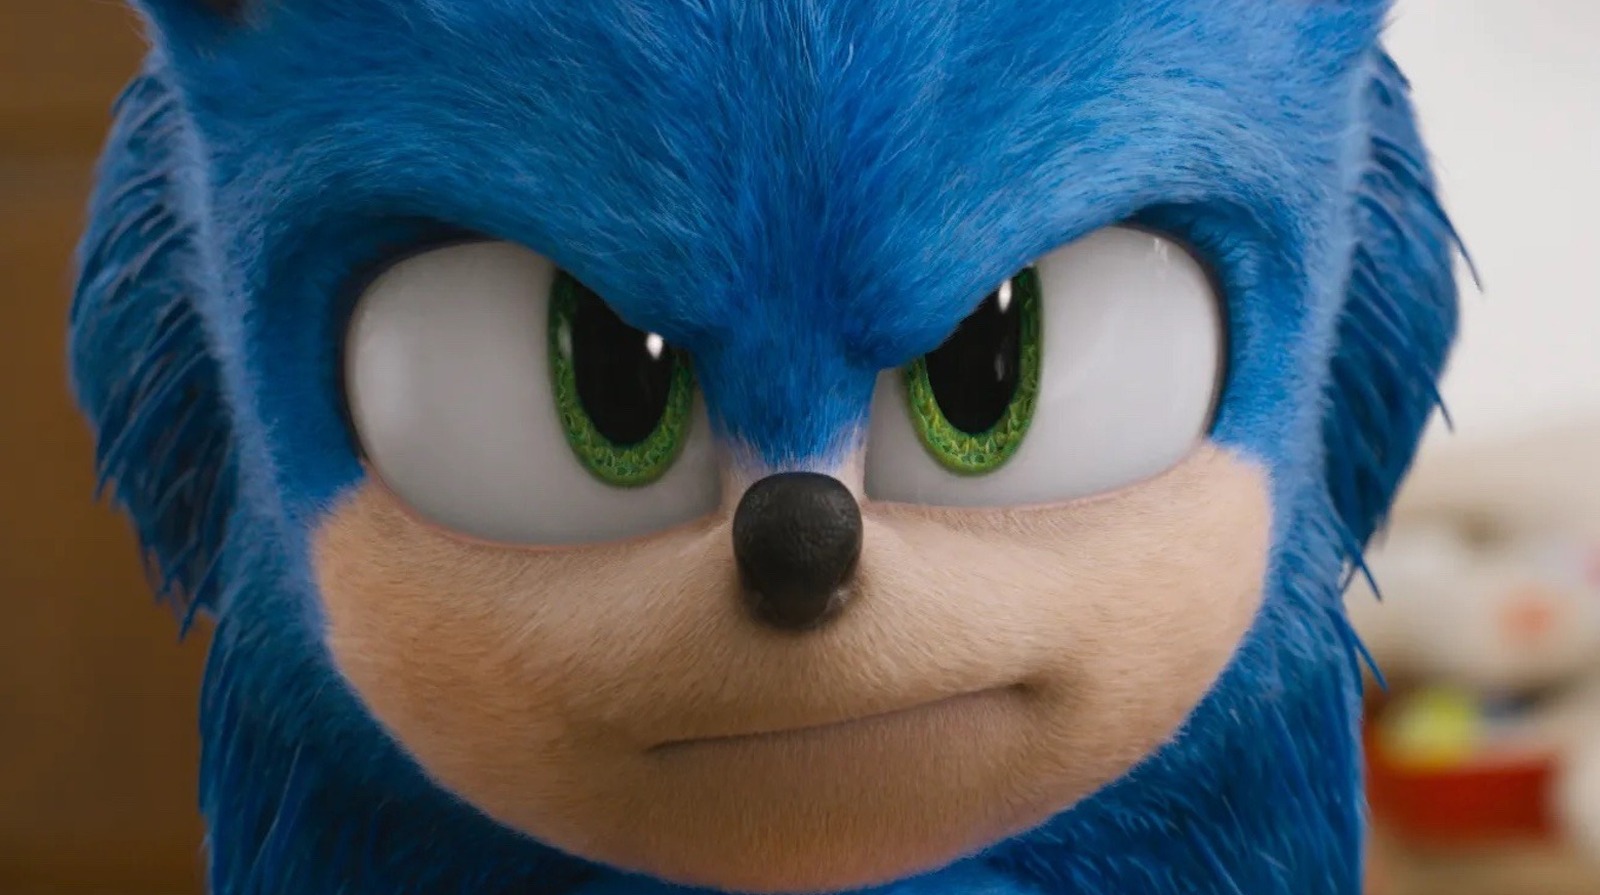 Sonic the Hedgehog 3 (2024) : FULL MOVIE LEAKED